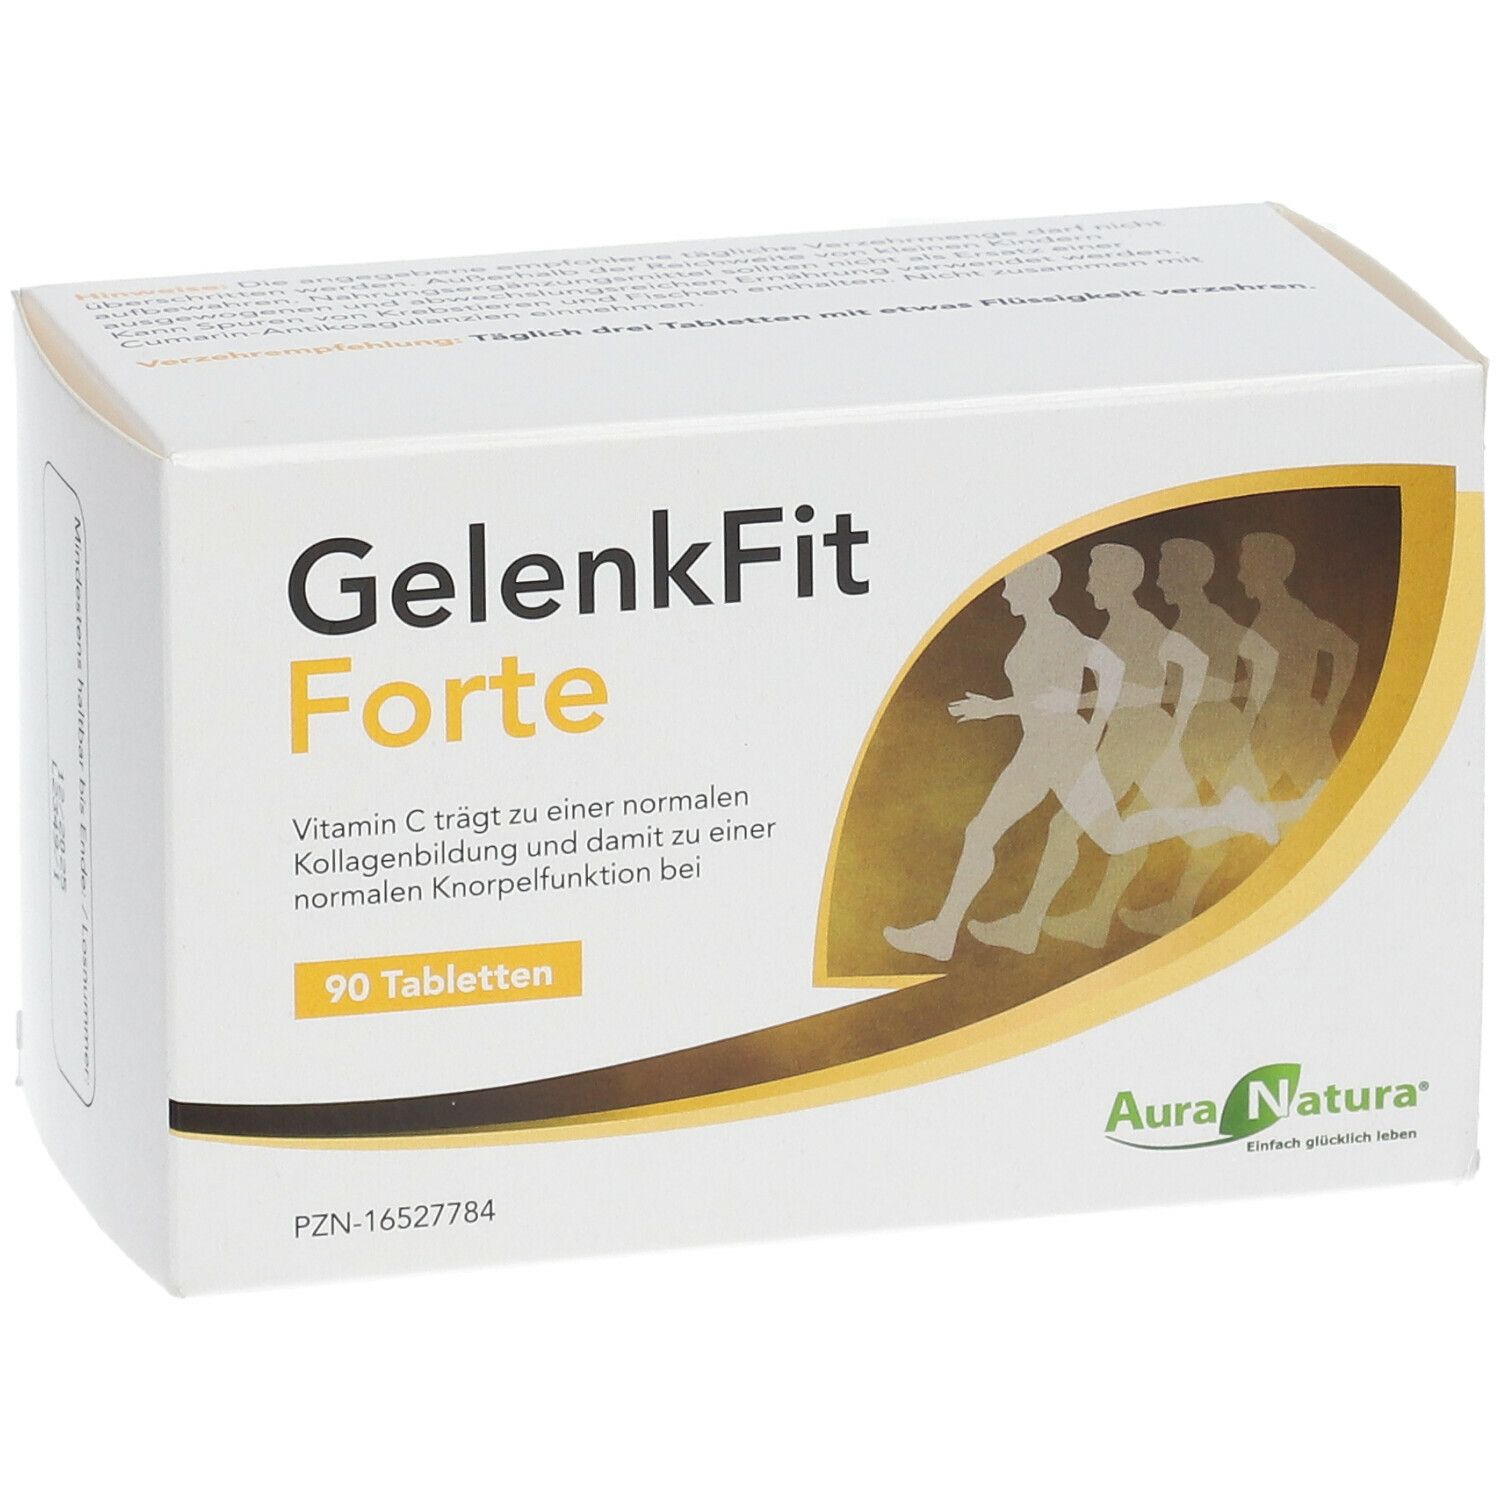 AURANATURA® GelenkFit Forte